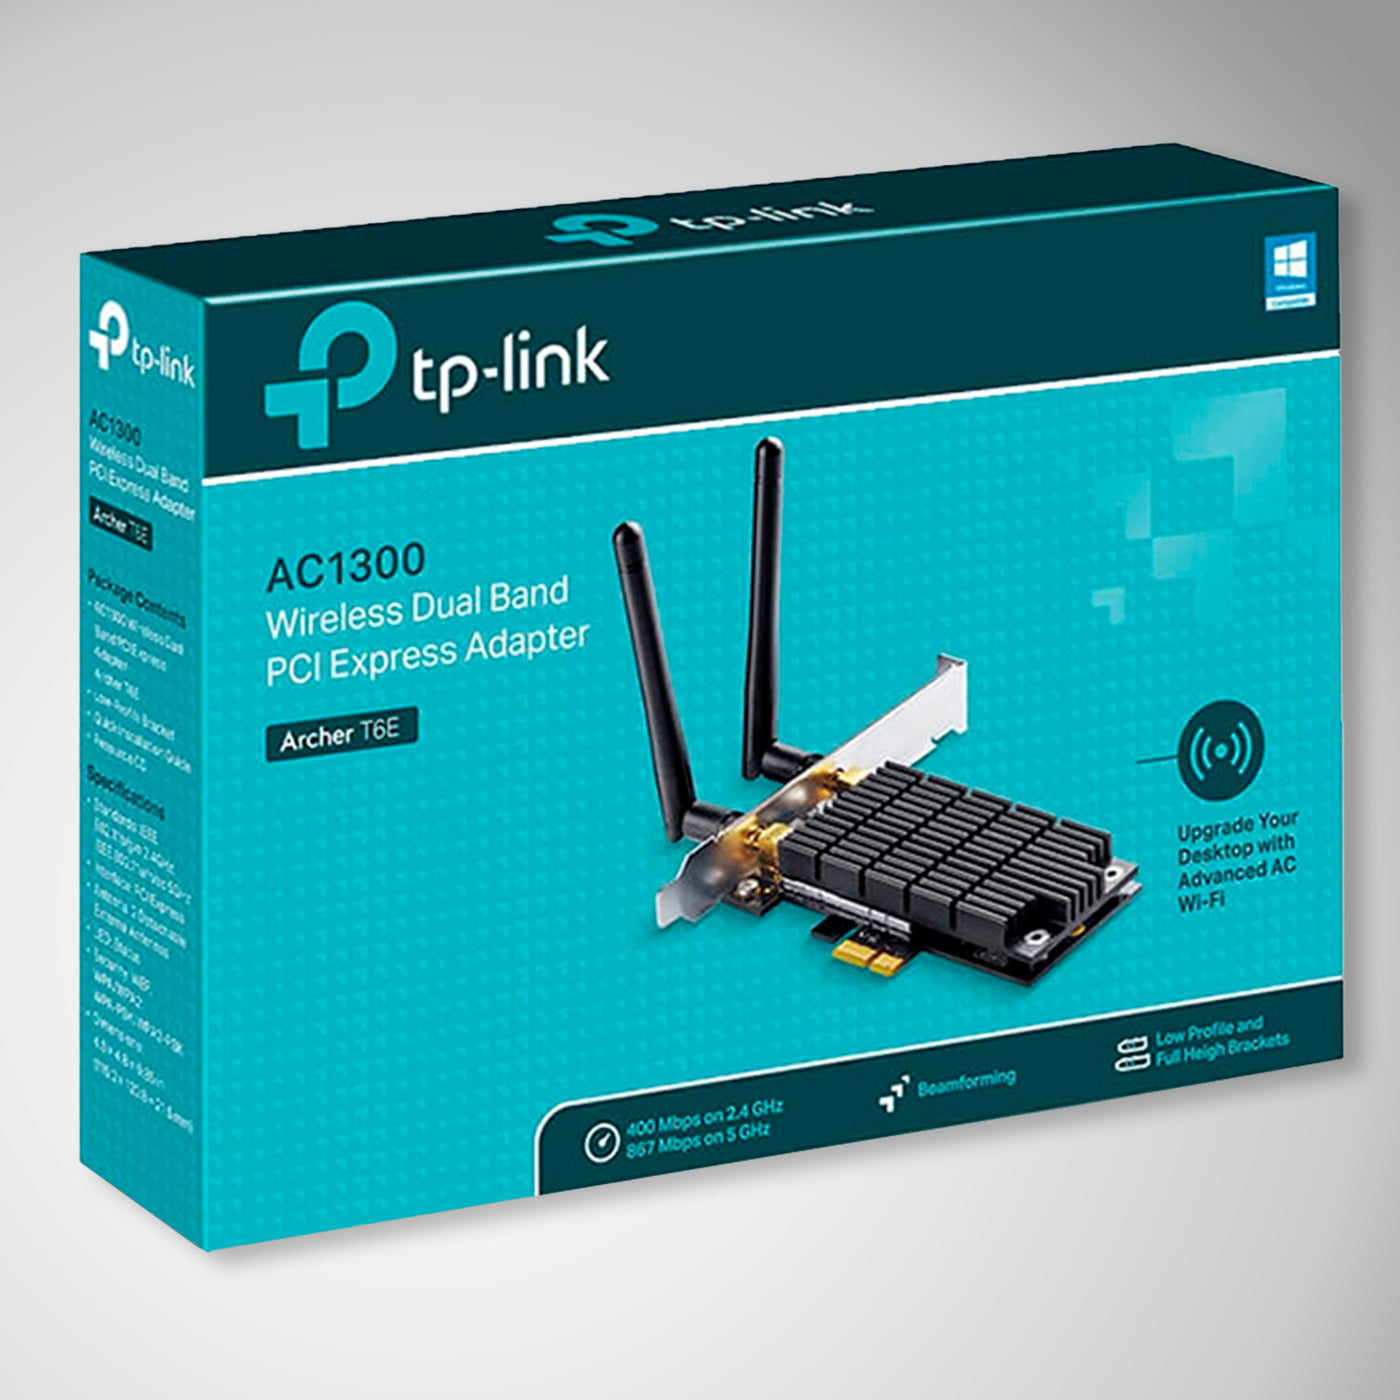 Tp-link Archer T6E AC1300 WI-FI PCI Express Adapter Speed